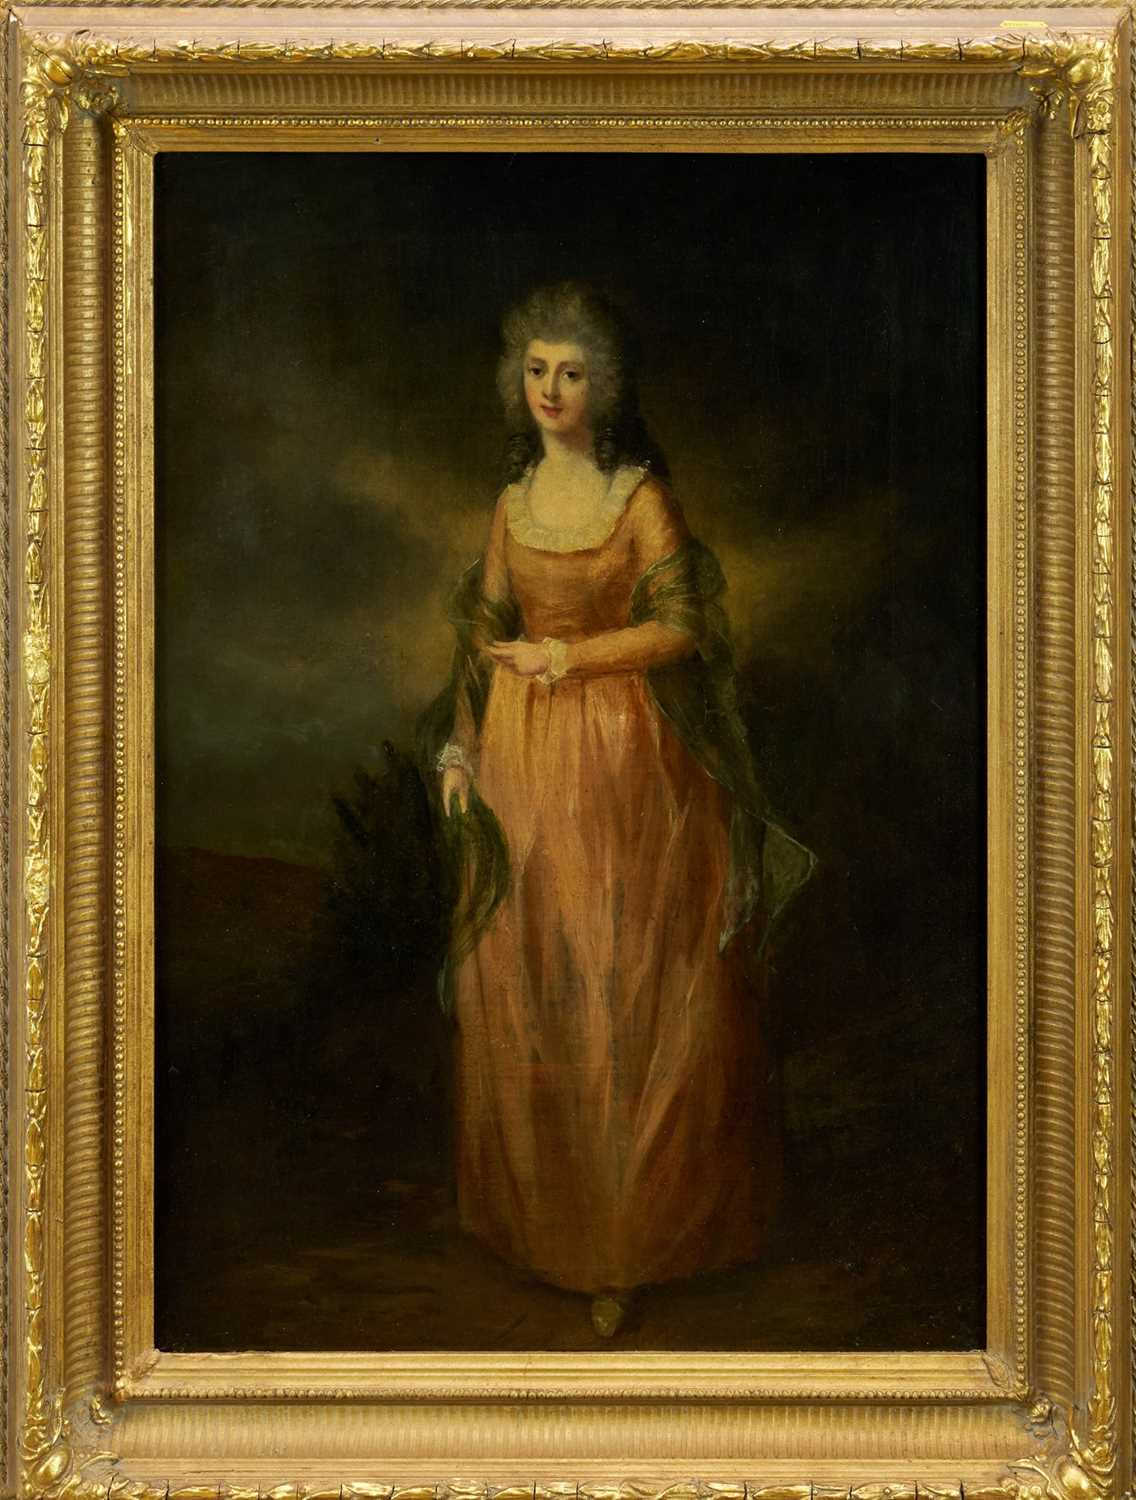 Follower of Thomas Gainsborough, 19th century, oil on canvas - portrait of an elegant lady, 69cm x 4